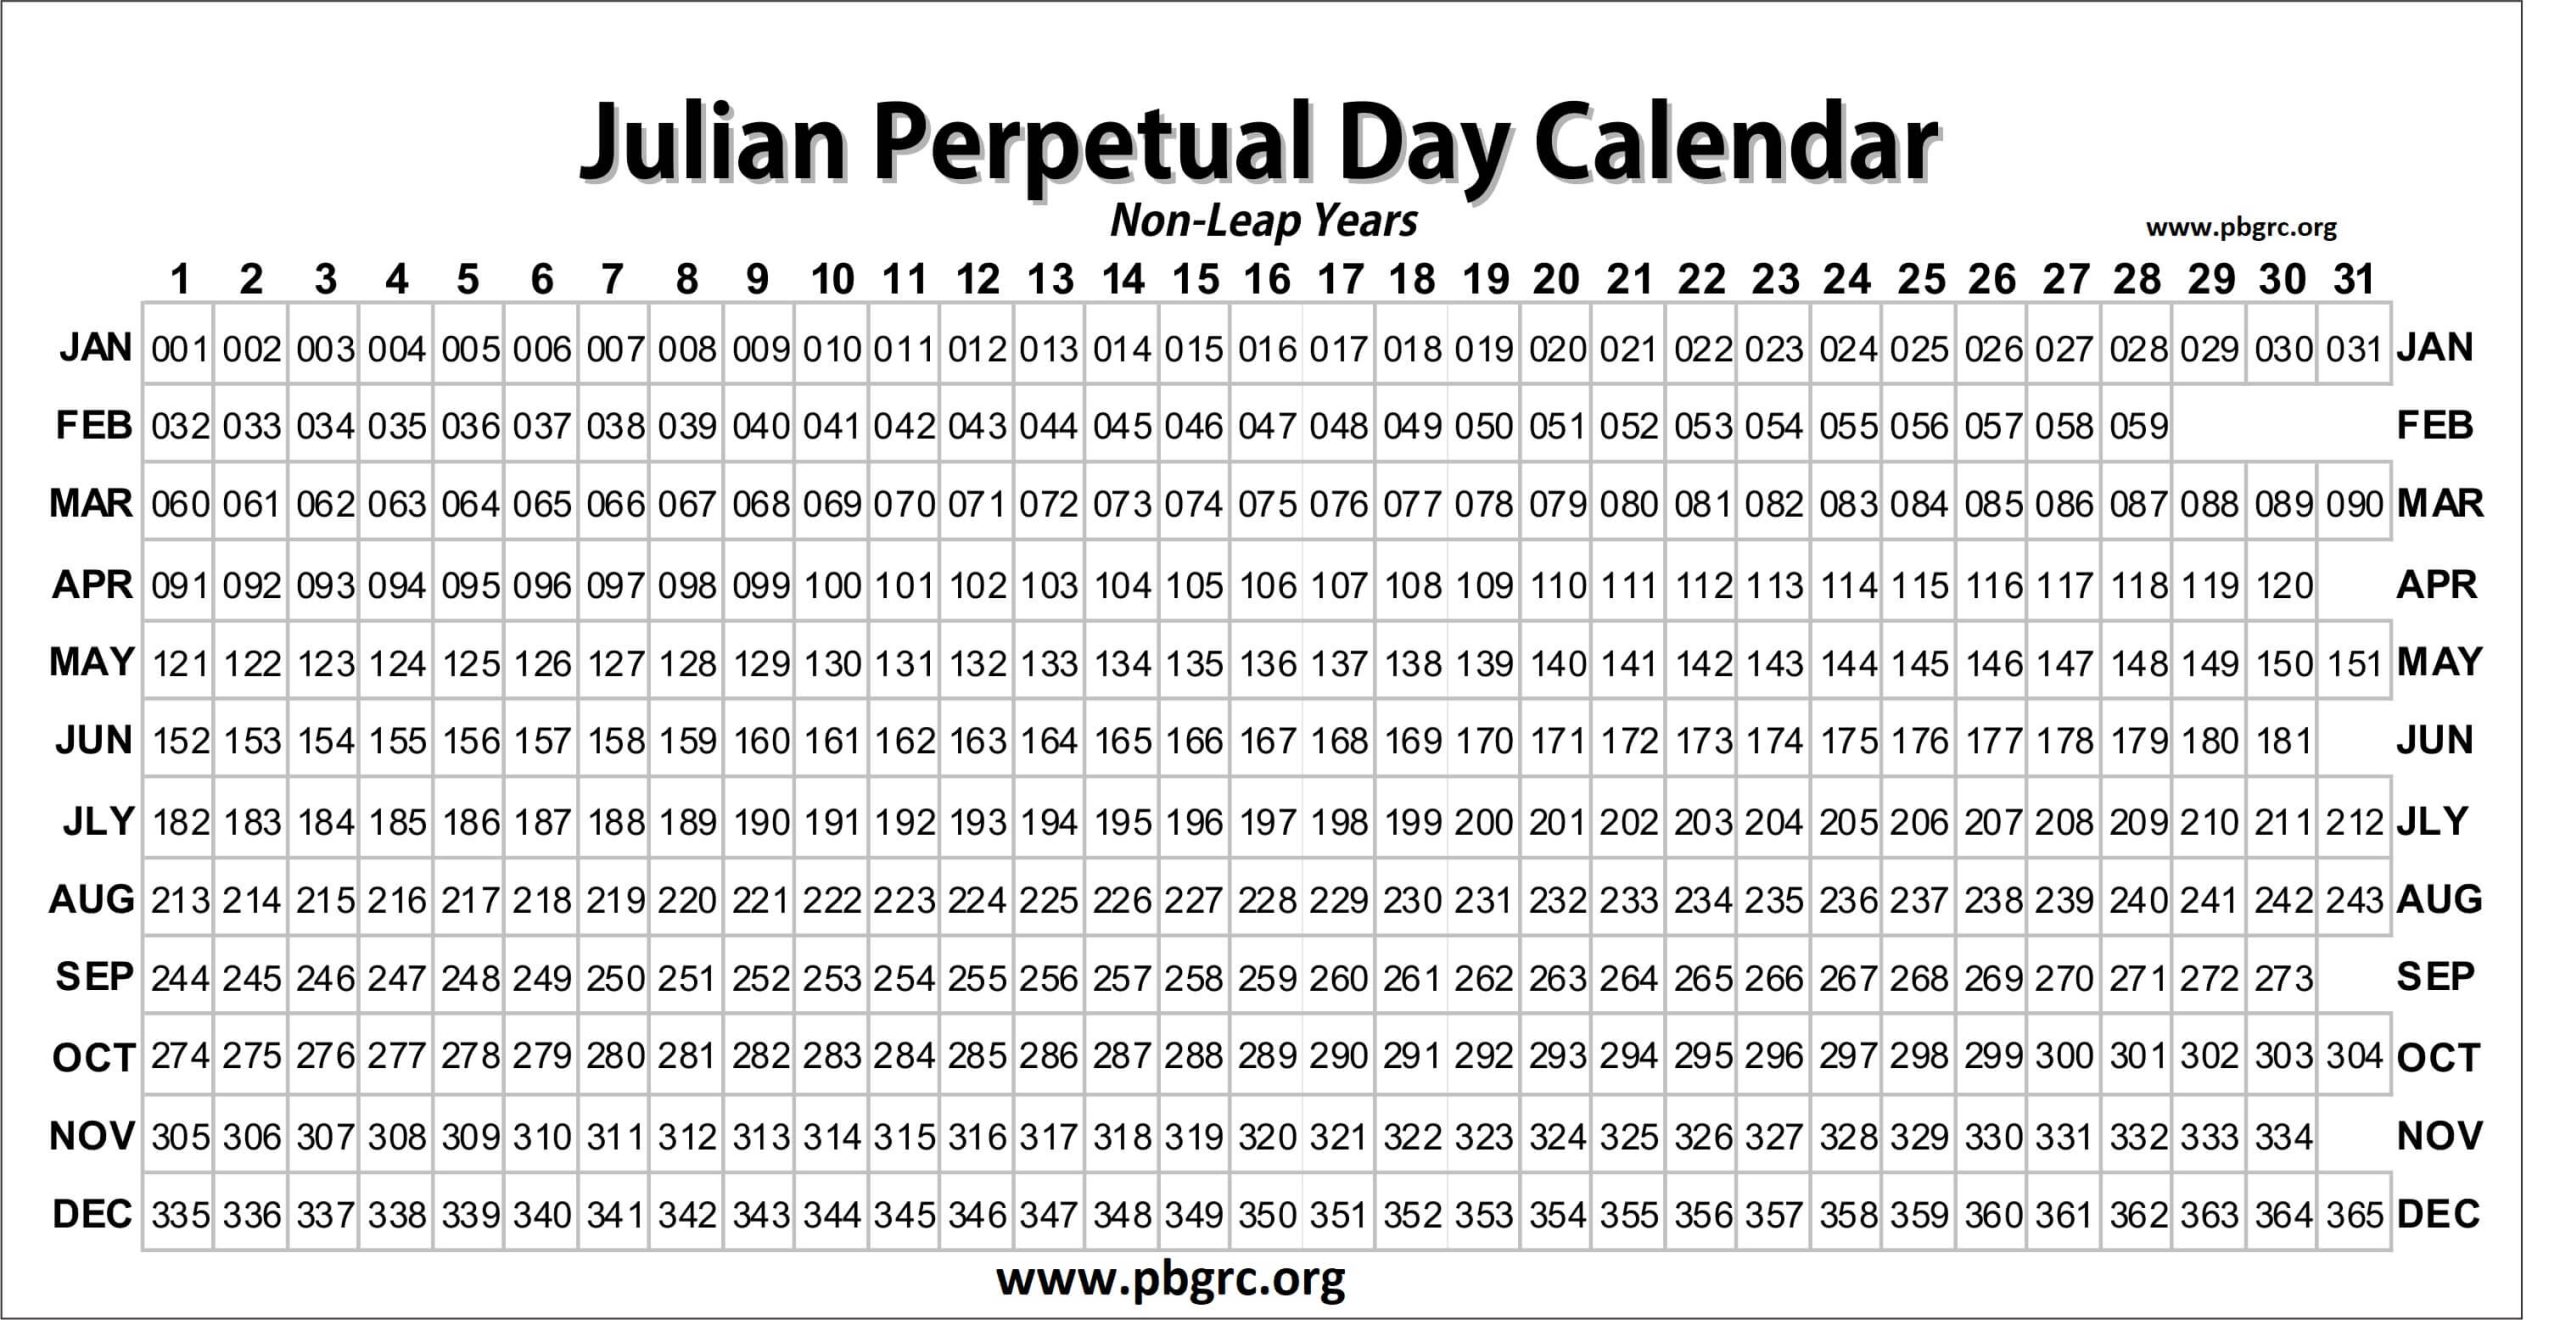 Mopar Julian Perpetual Date Coded Calendar